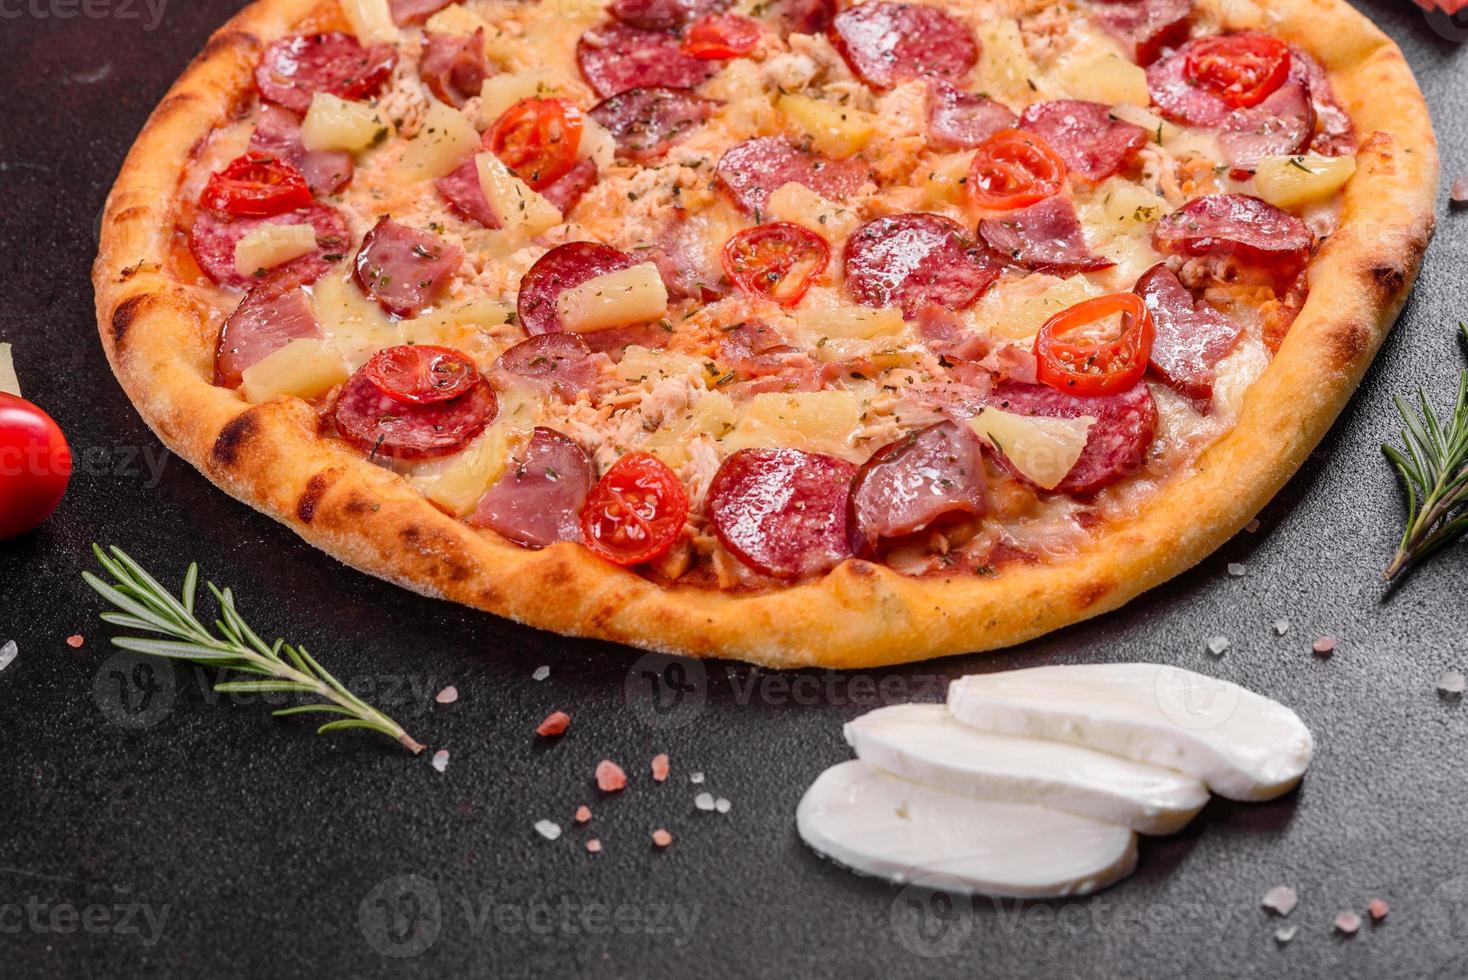 pepperoni pizza met mozzarella kaas, salami, ham foto